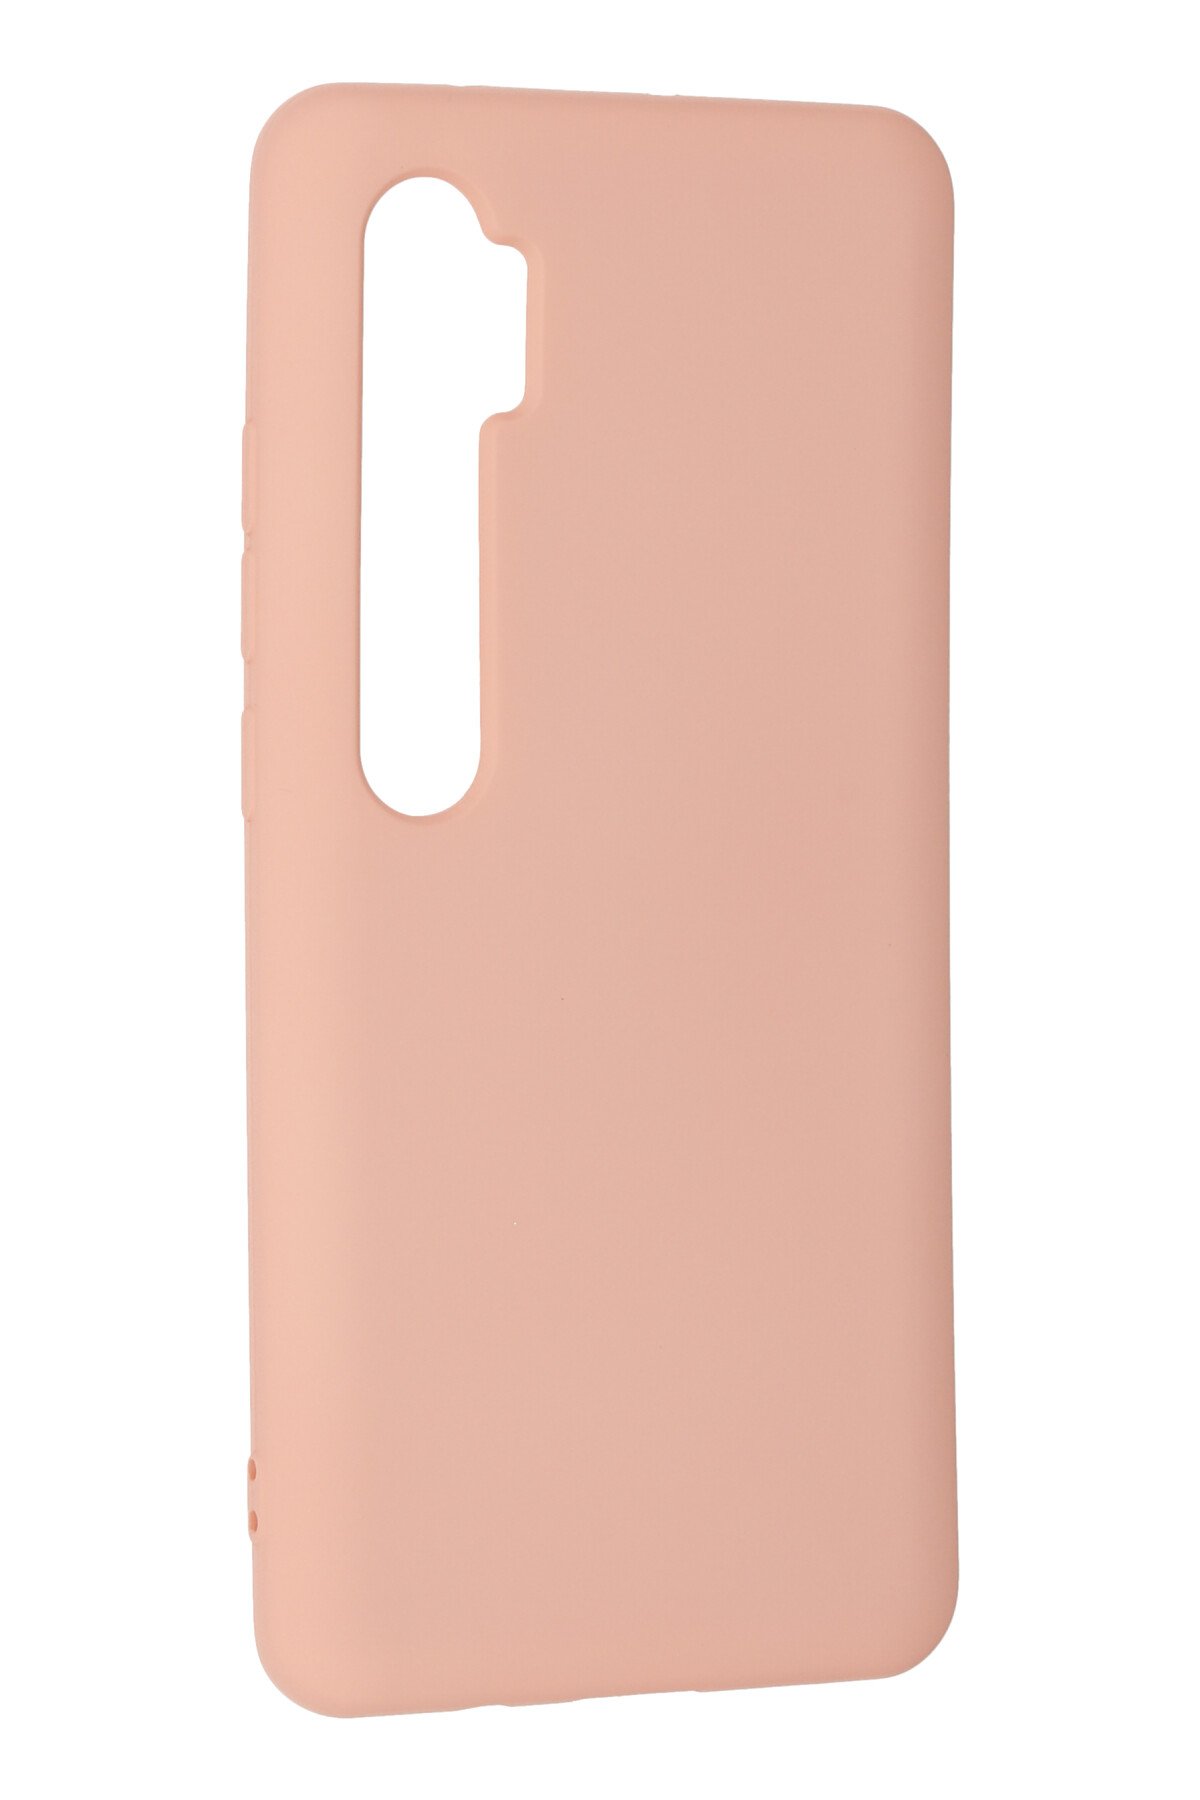 Newface Xiaomi Mi Note 10 Lite Kılıf Lüx Şeffaf Silikon - Şeffaf